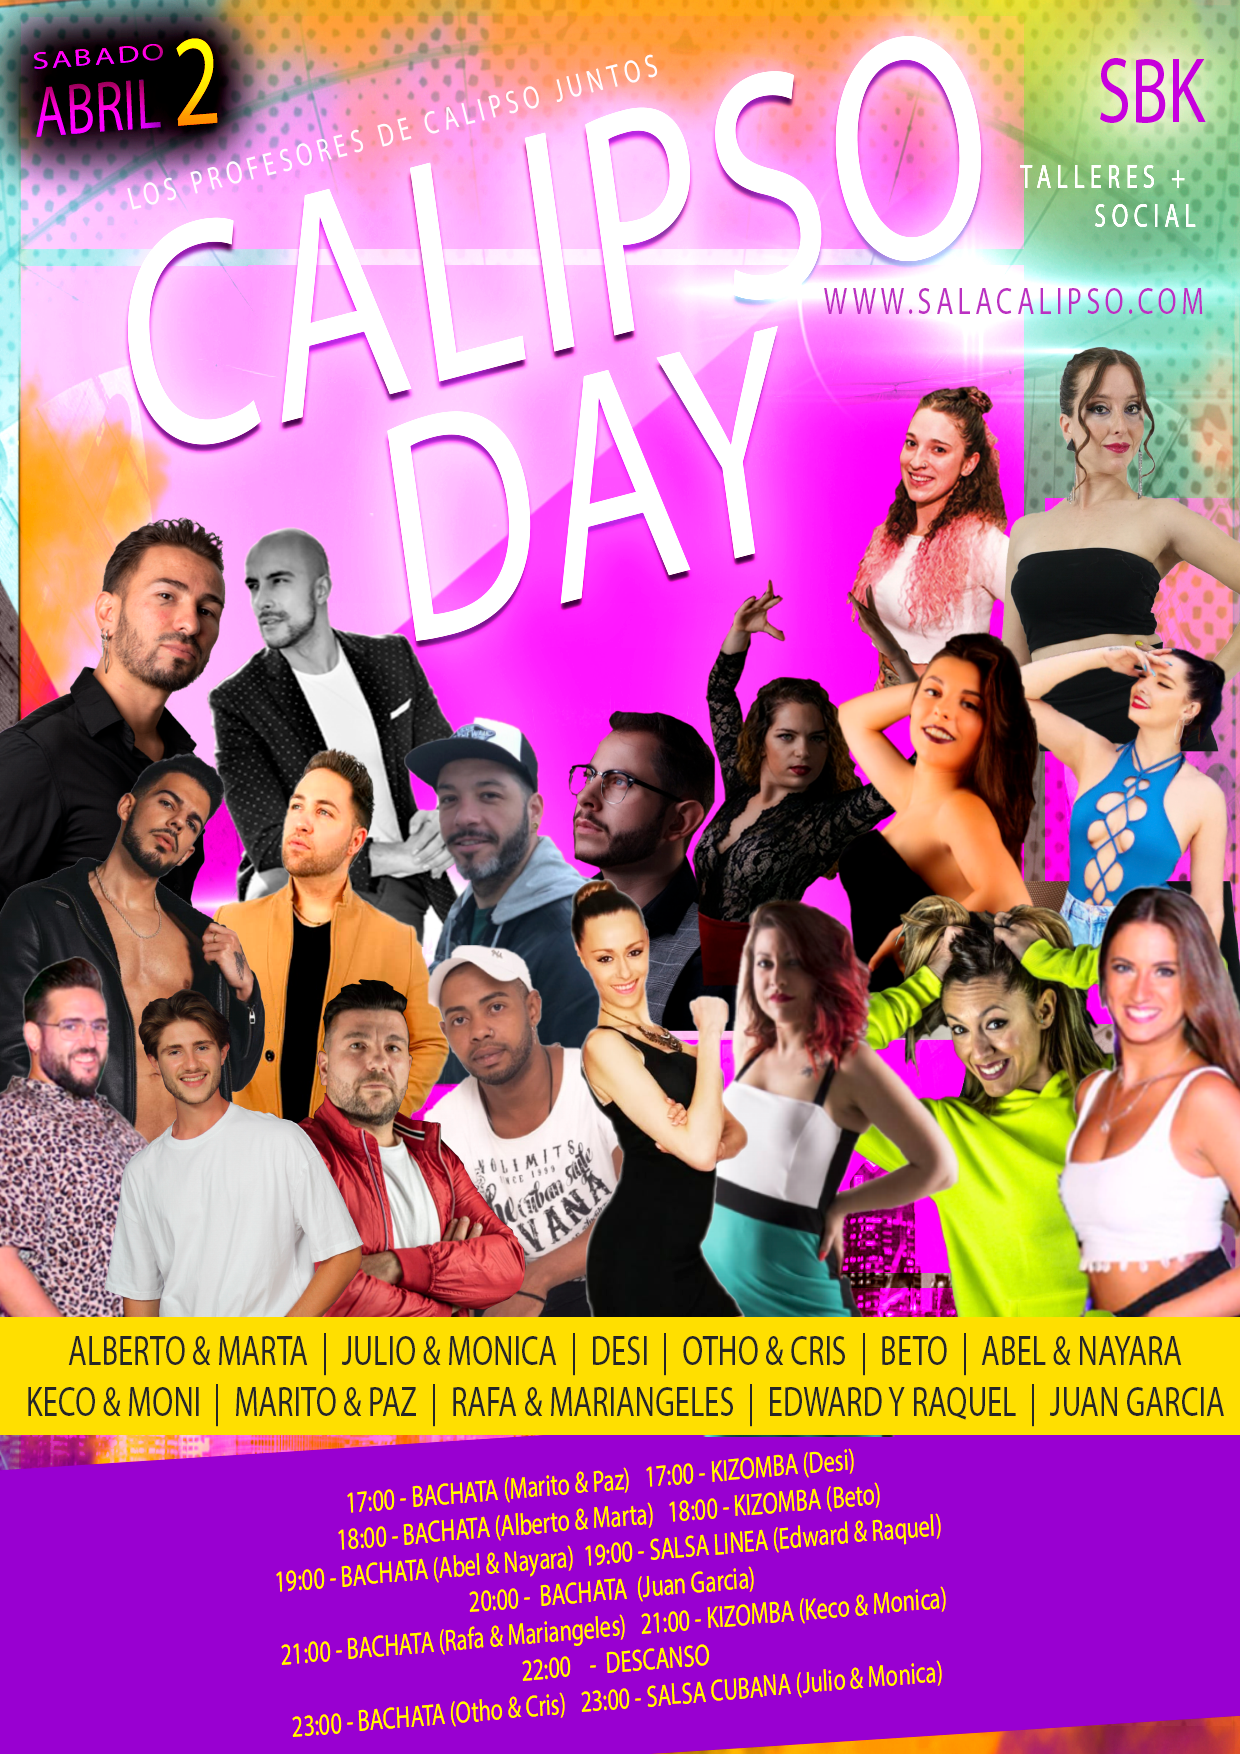 Calipso DAY con todos los profesores de CALIPSO  |  Sabado 2 Abril 2022